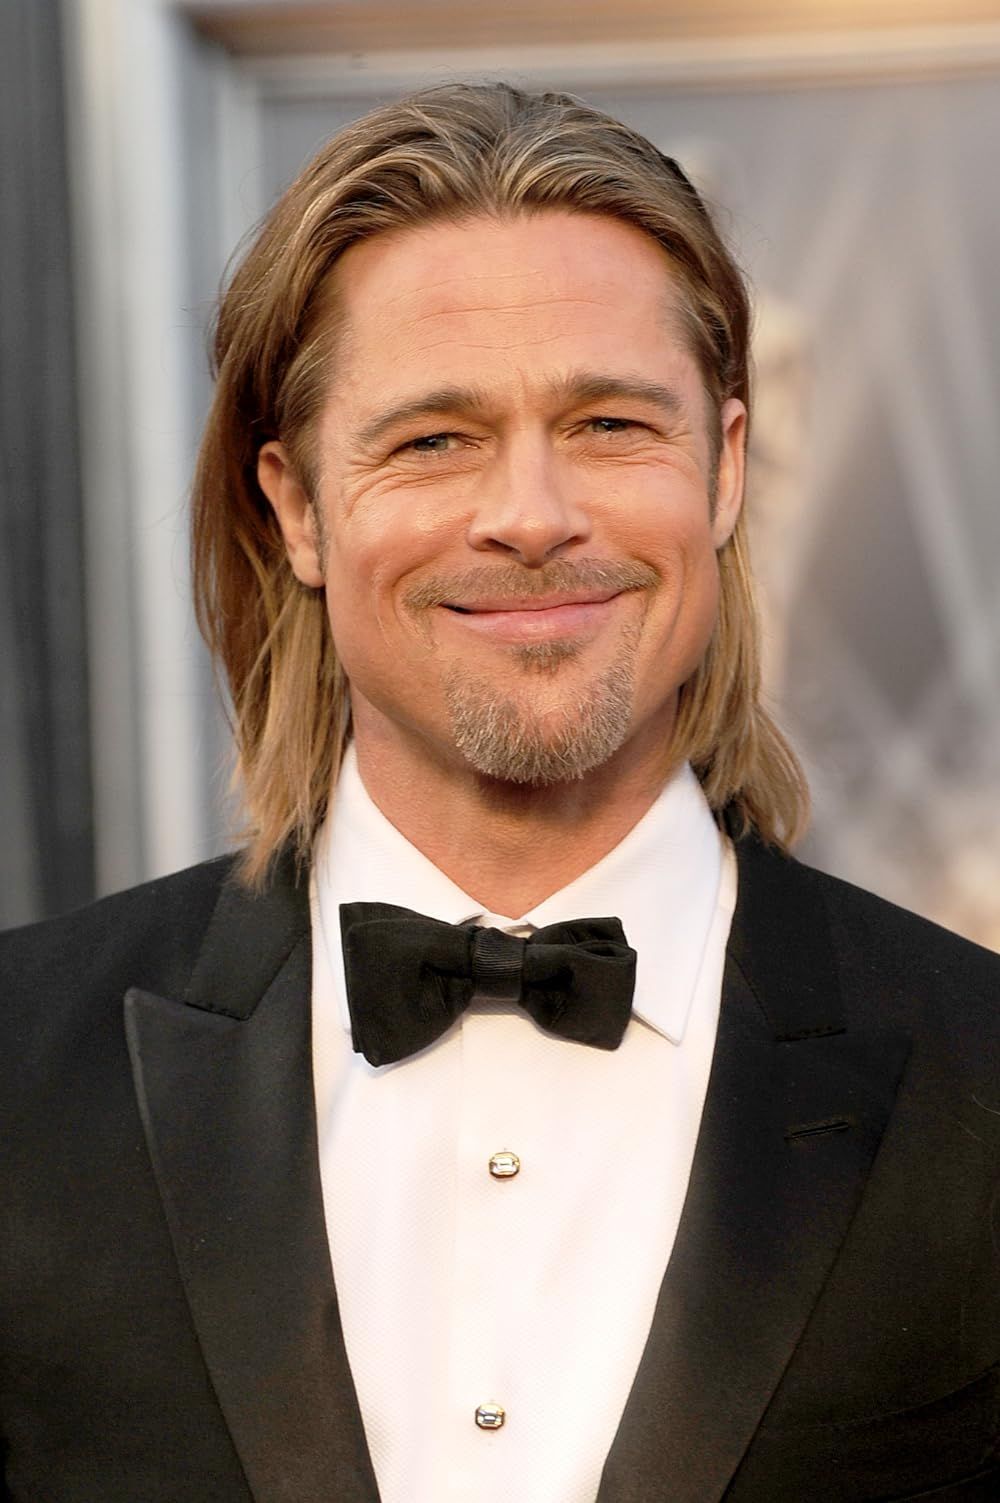 Muere el actor Brad Pitt